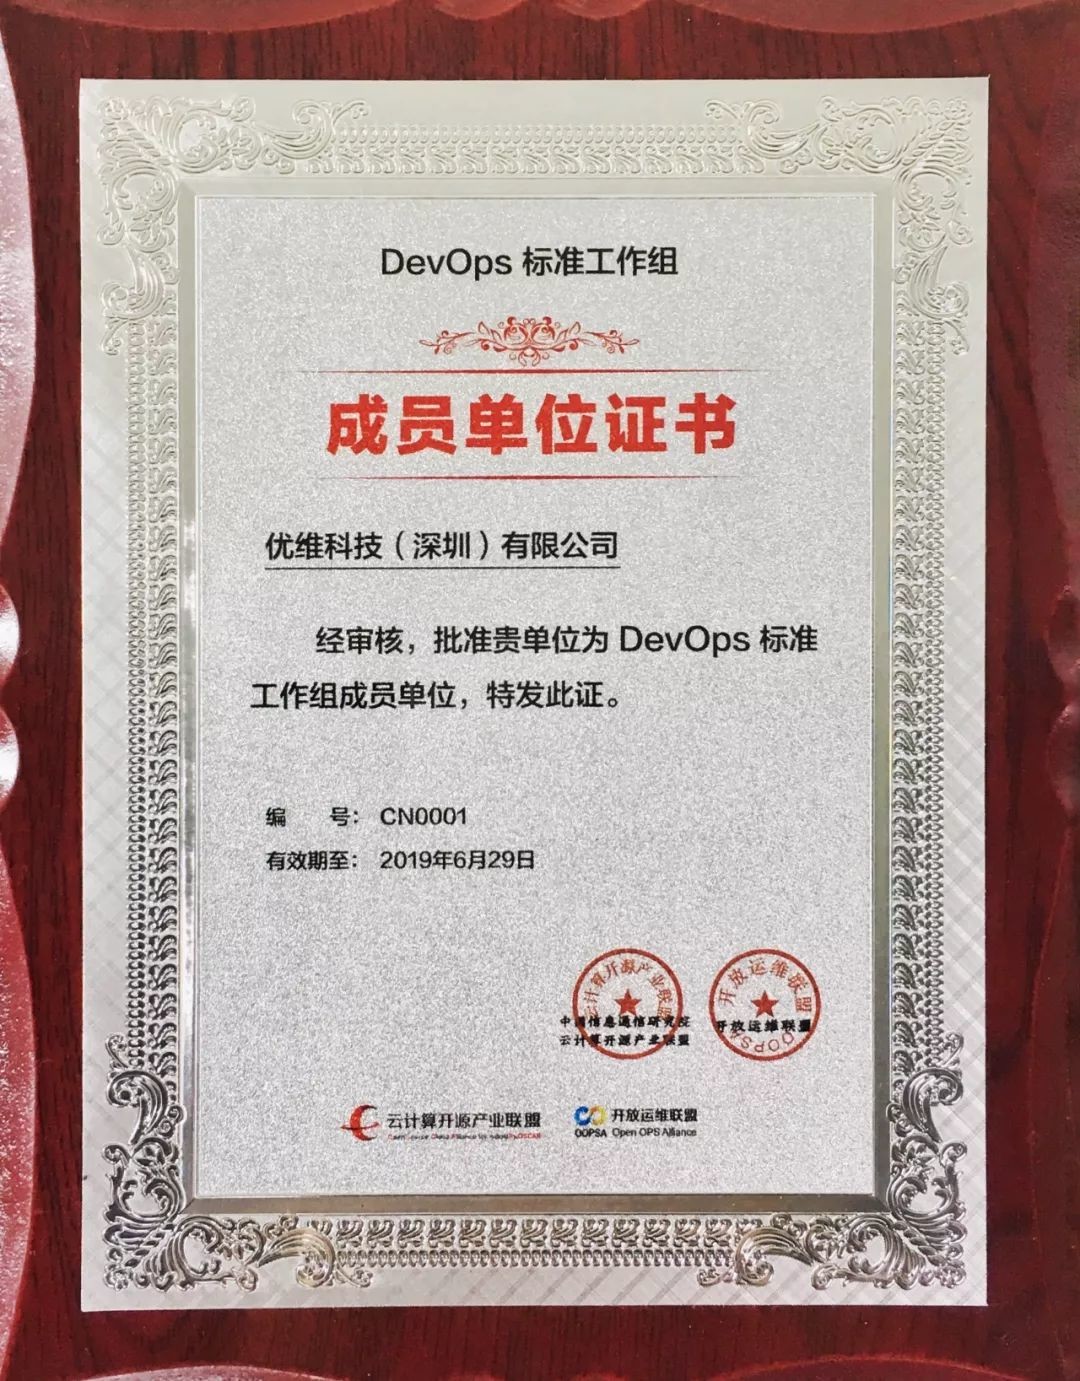 “DevOps 标准工作组成员单位”证书